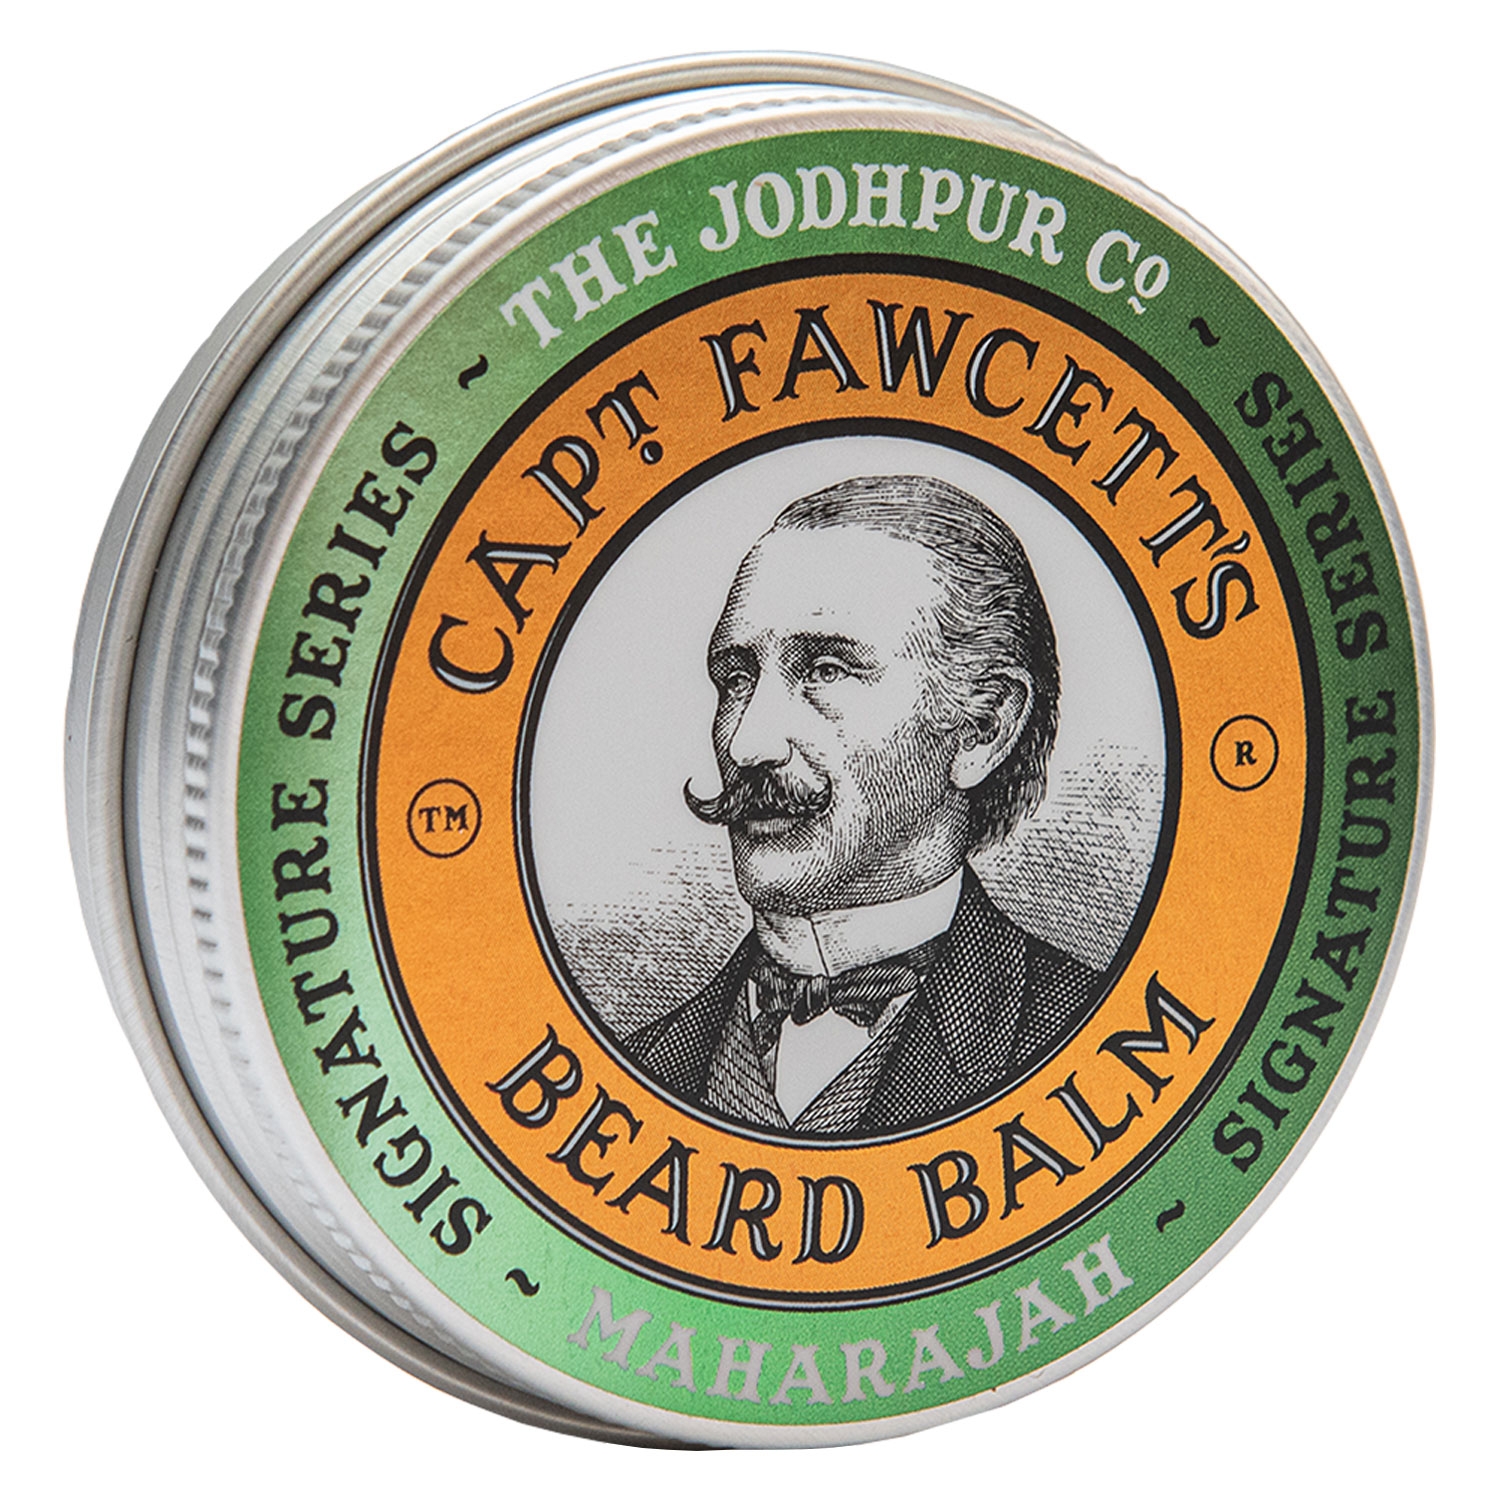 Product image from Capt. Fawcett Care - Maharajah Beard Balm